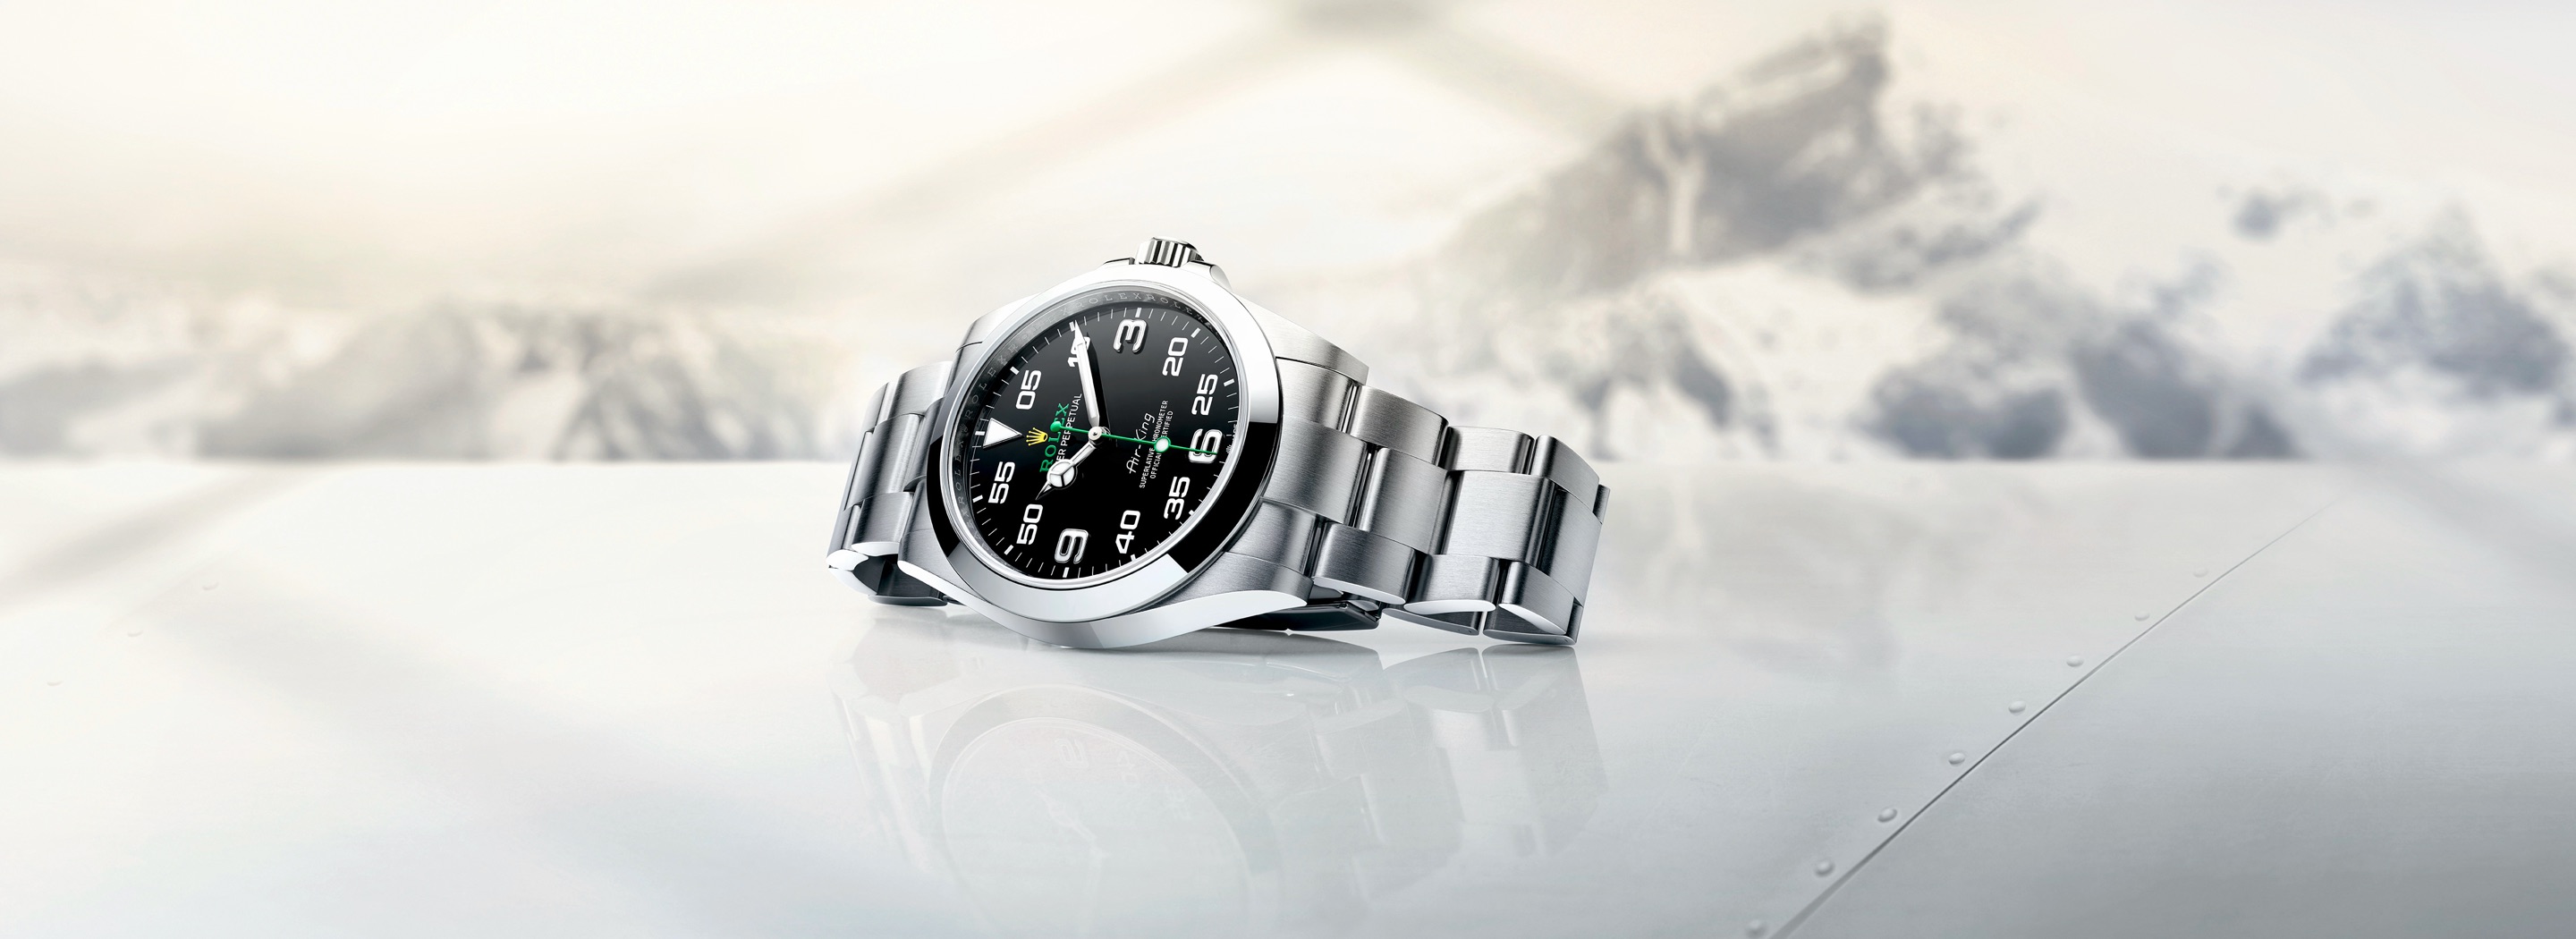 Rolex Air-King watches